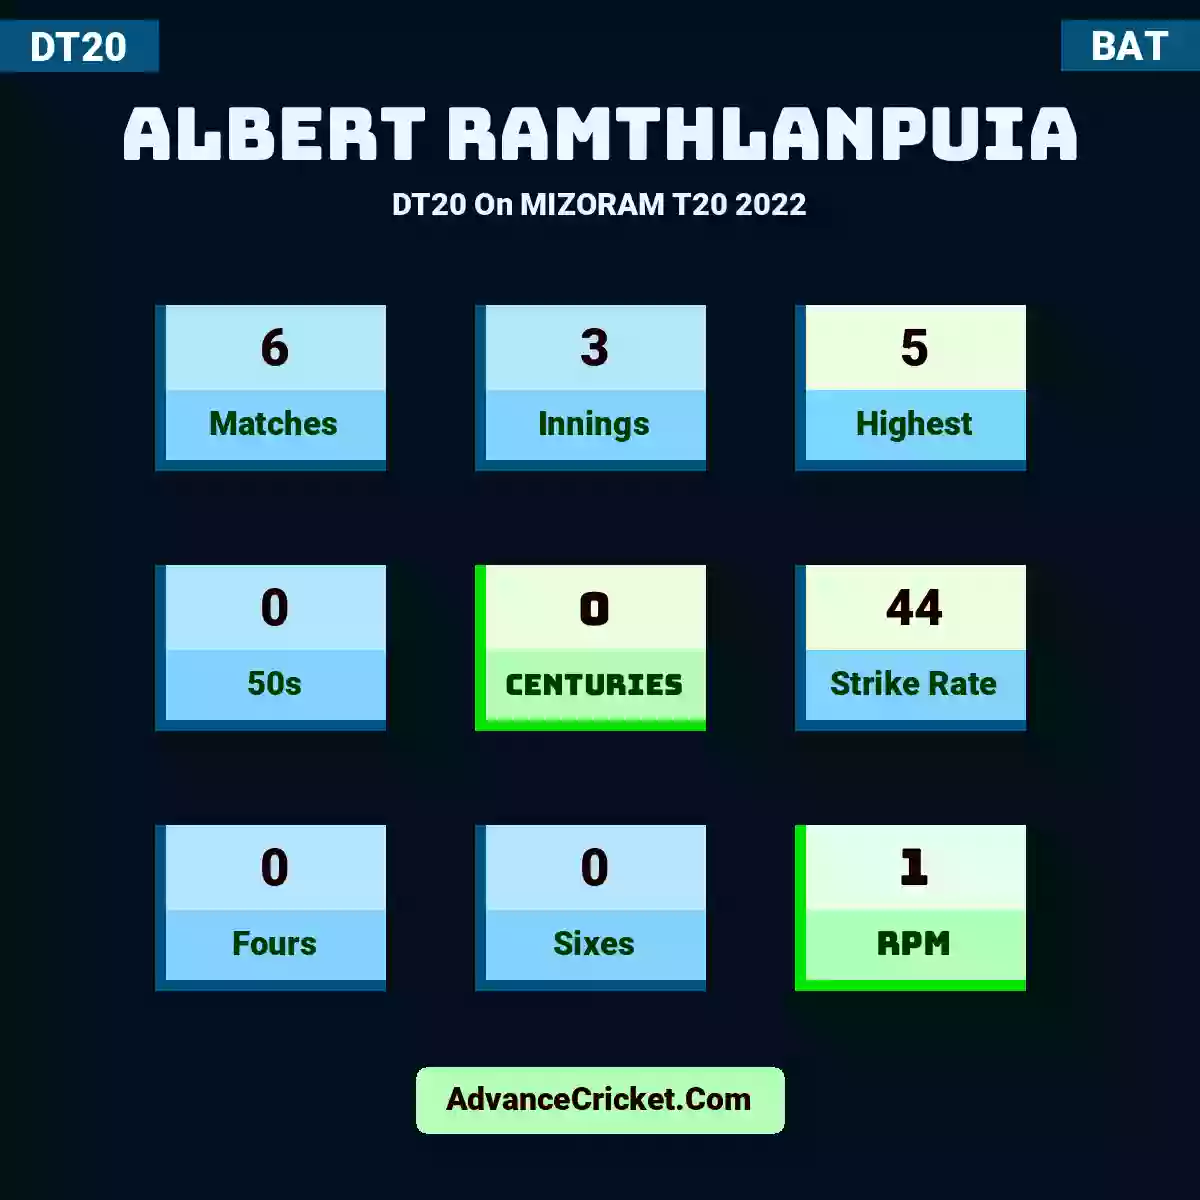 Albert Ramthlanpuia DT20  On MIZORAM T20 2022, Albert Ramthlanpuia played 6 matches, scored 5 runs as highest, 0 half-centuries, and 0 centuries, with a strike rate of 44. A.Ramthlanpuia hit 0 fours and 0 sixes, with an RPM of 1.